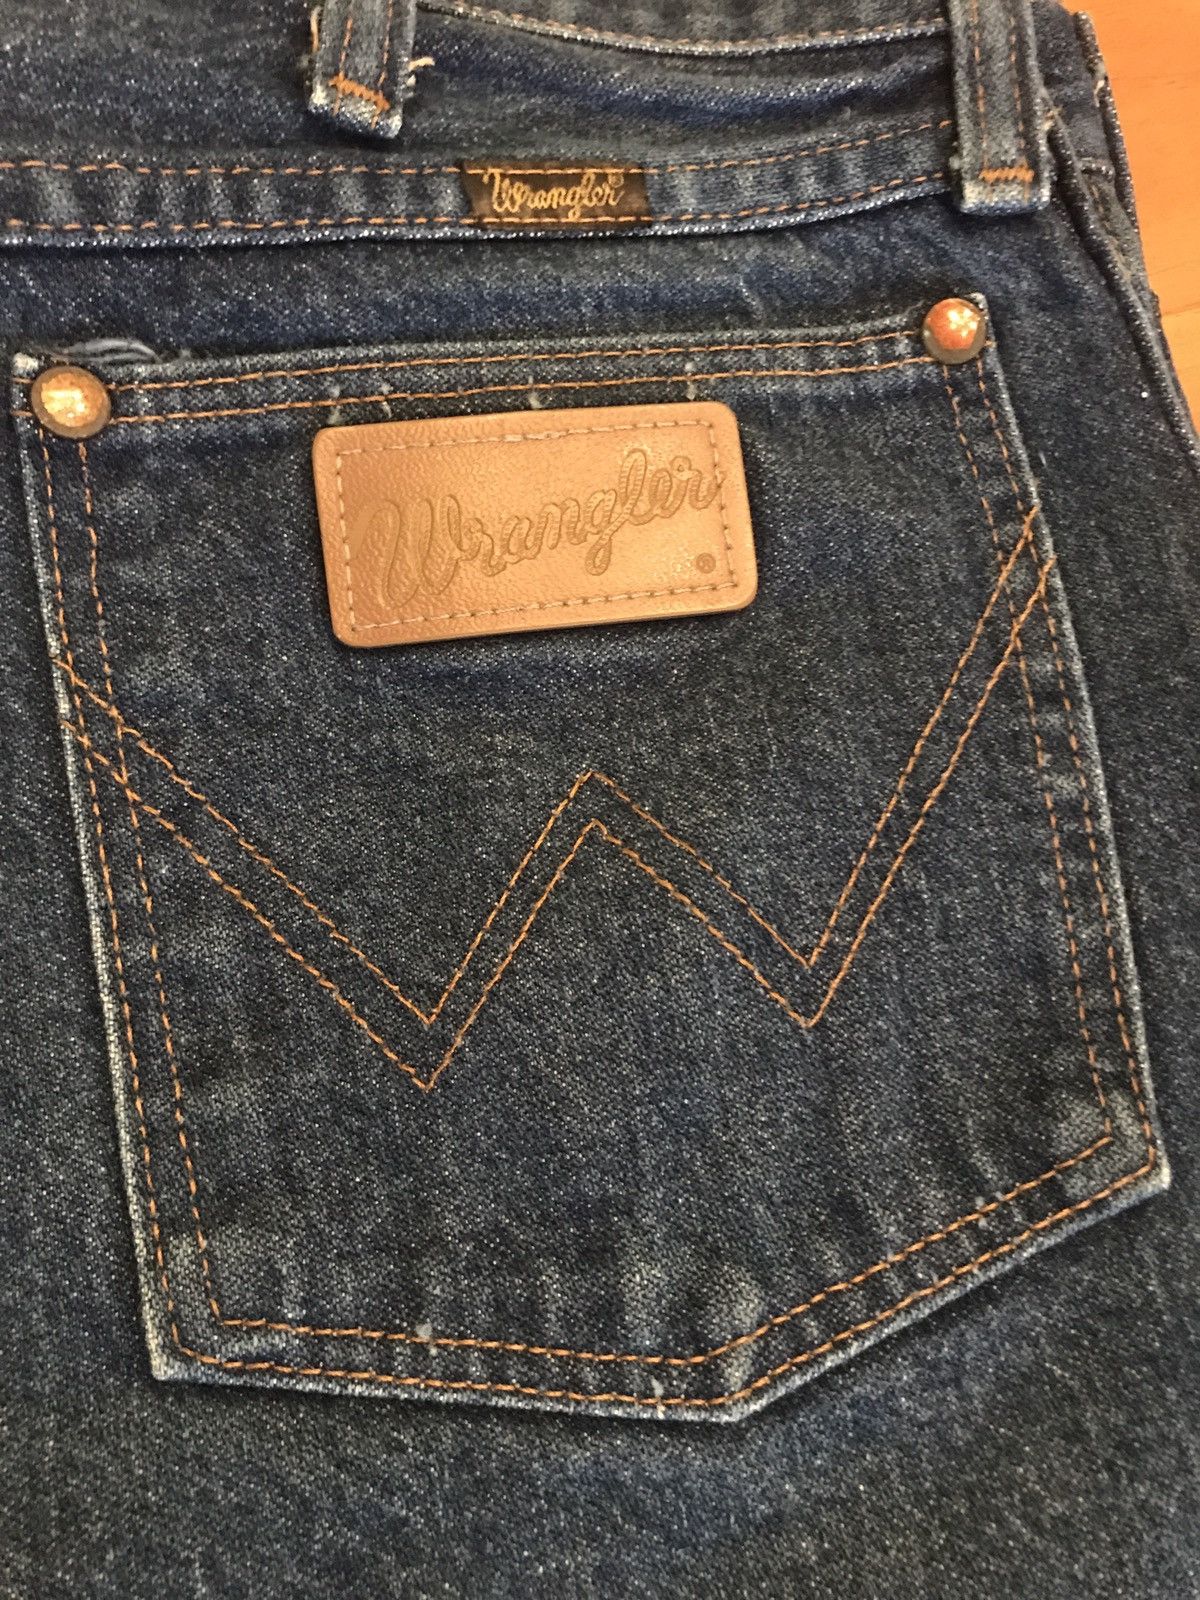 Vintage Vintage Made in USA Wrangler Work Jeans Size US 35 - 2 Preview